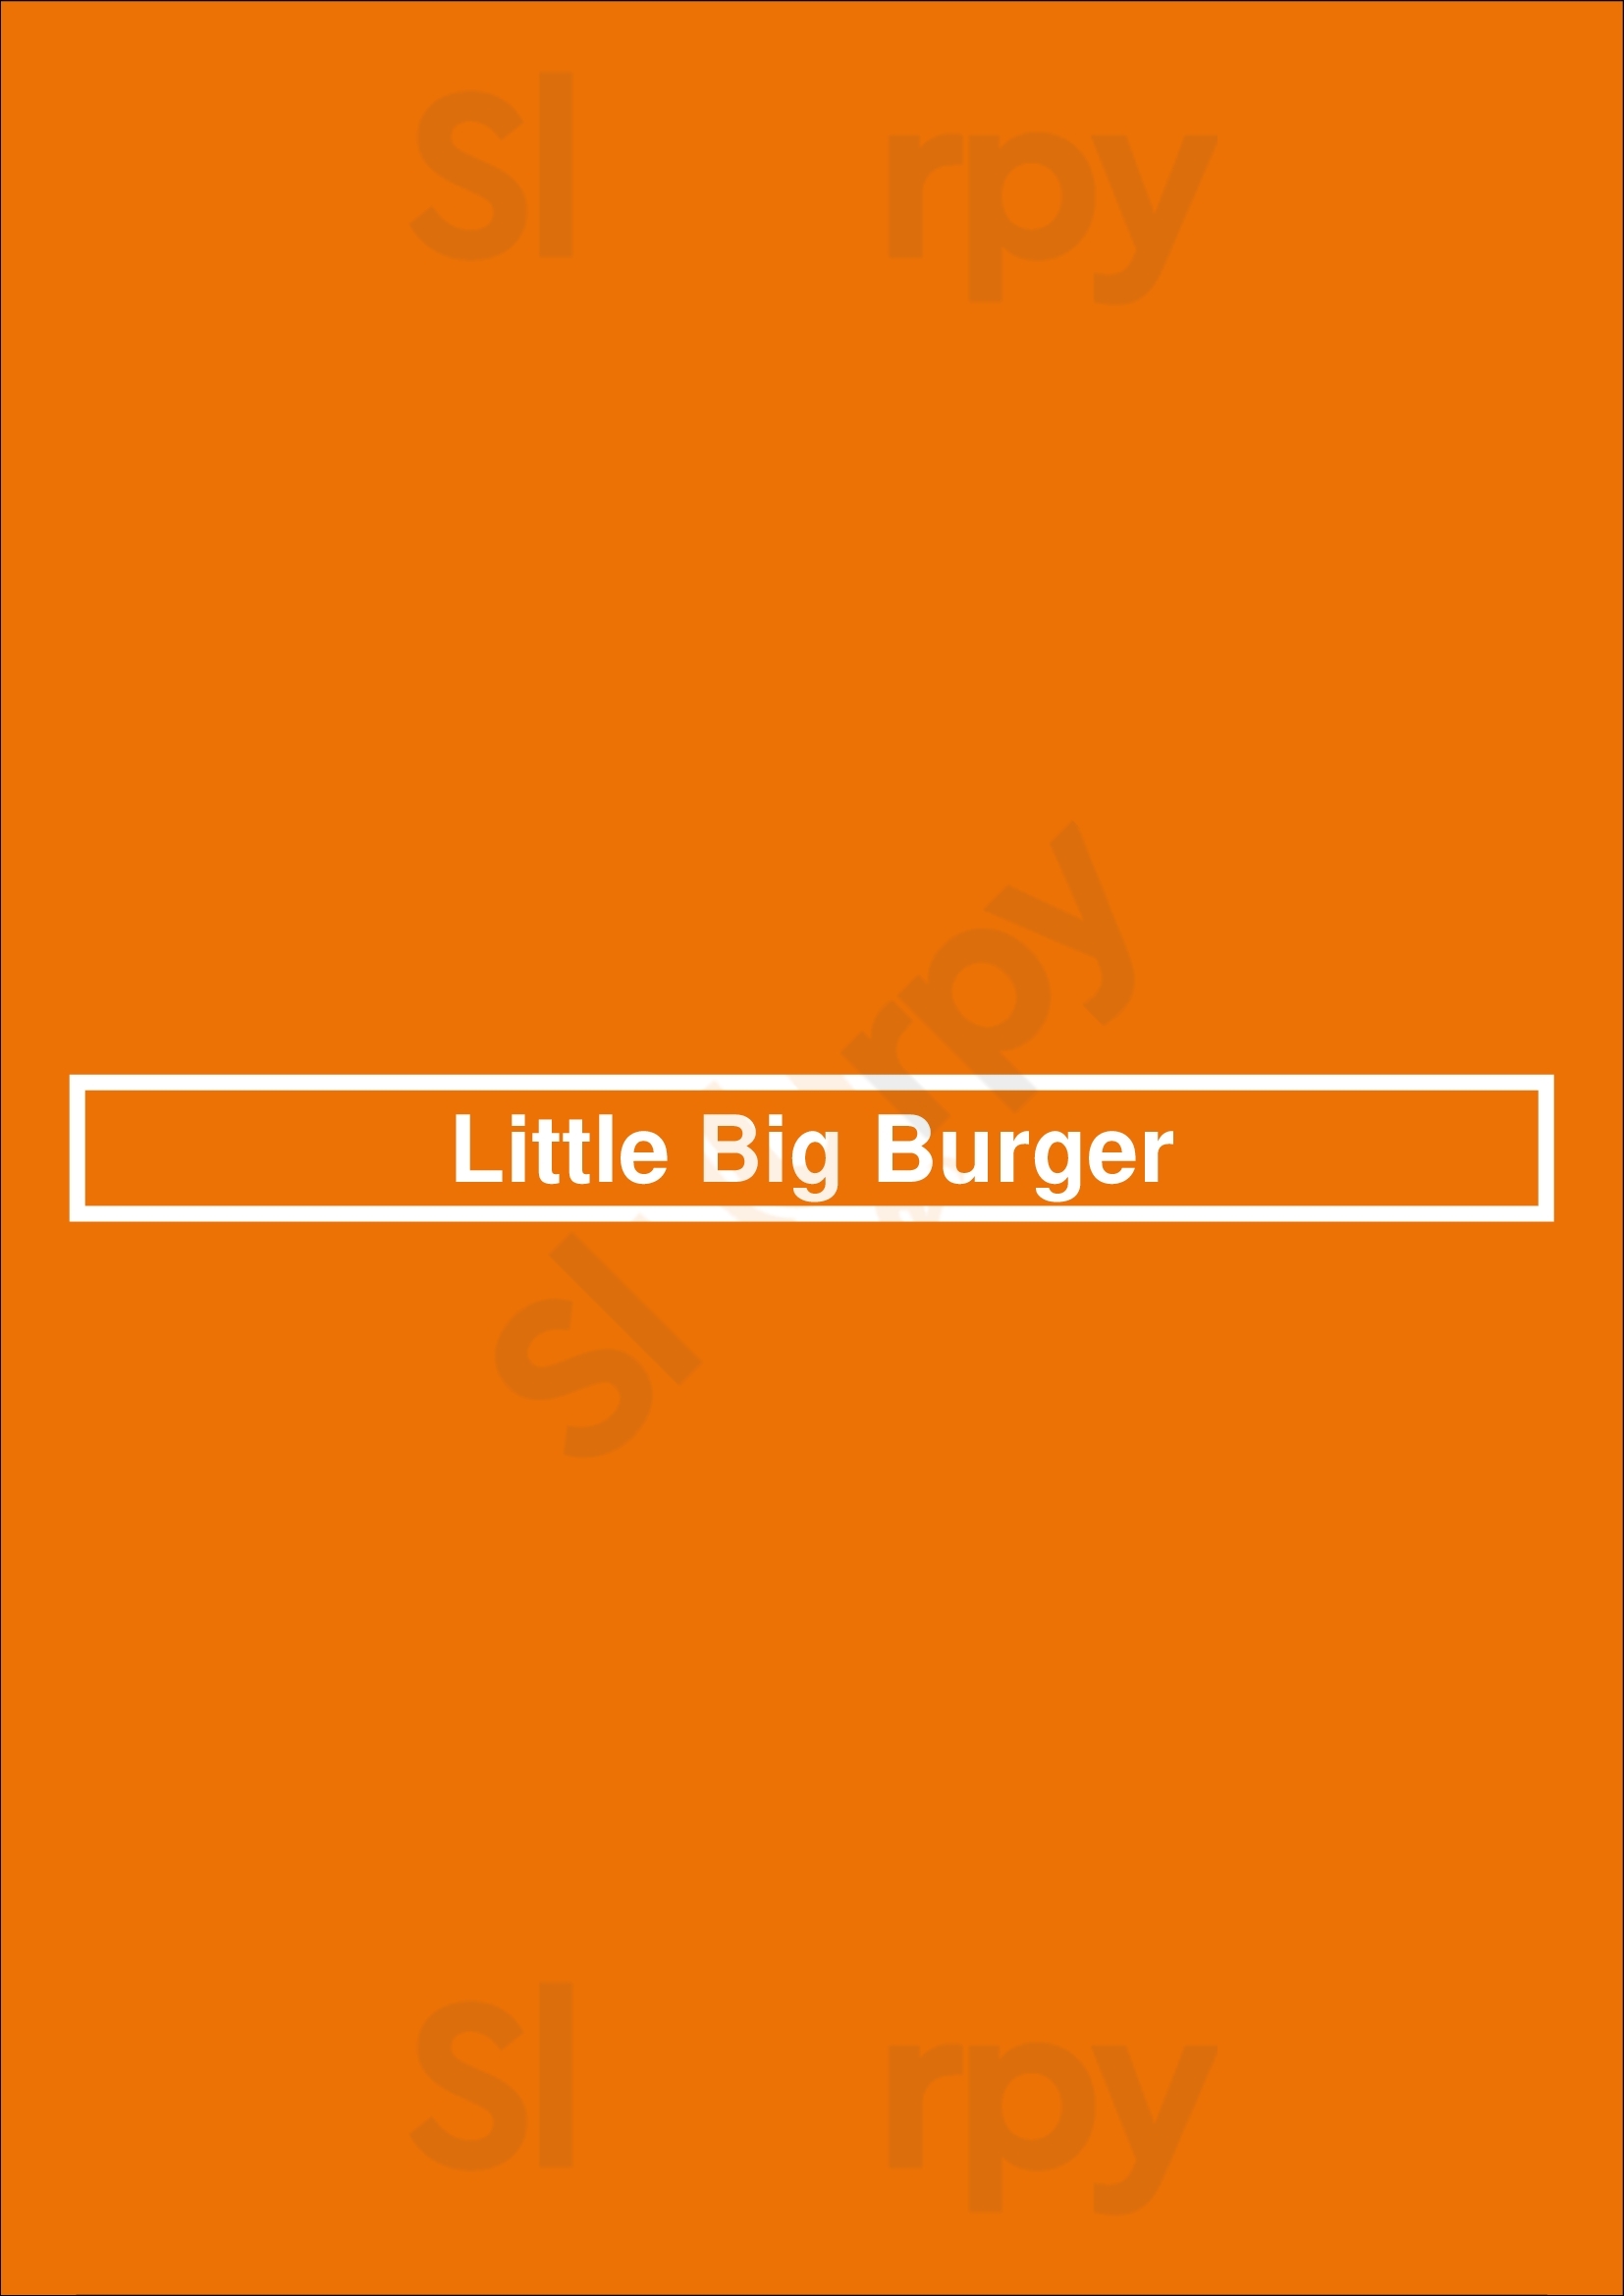 Little Big Burger Charlotte Menu - 1